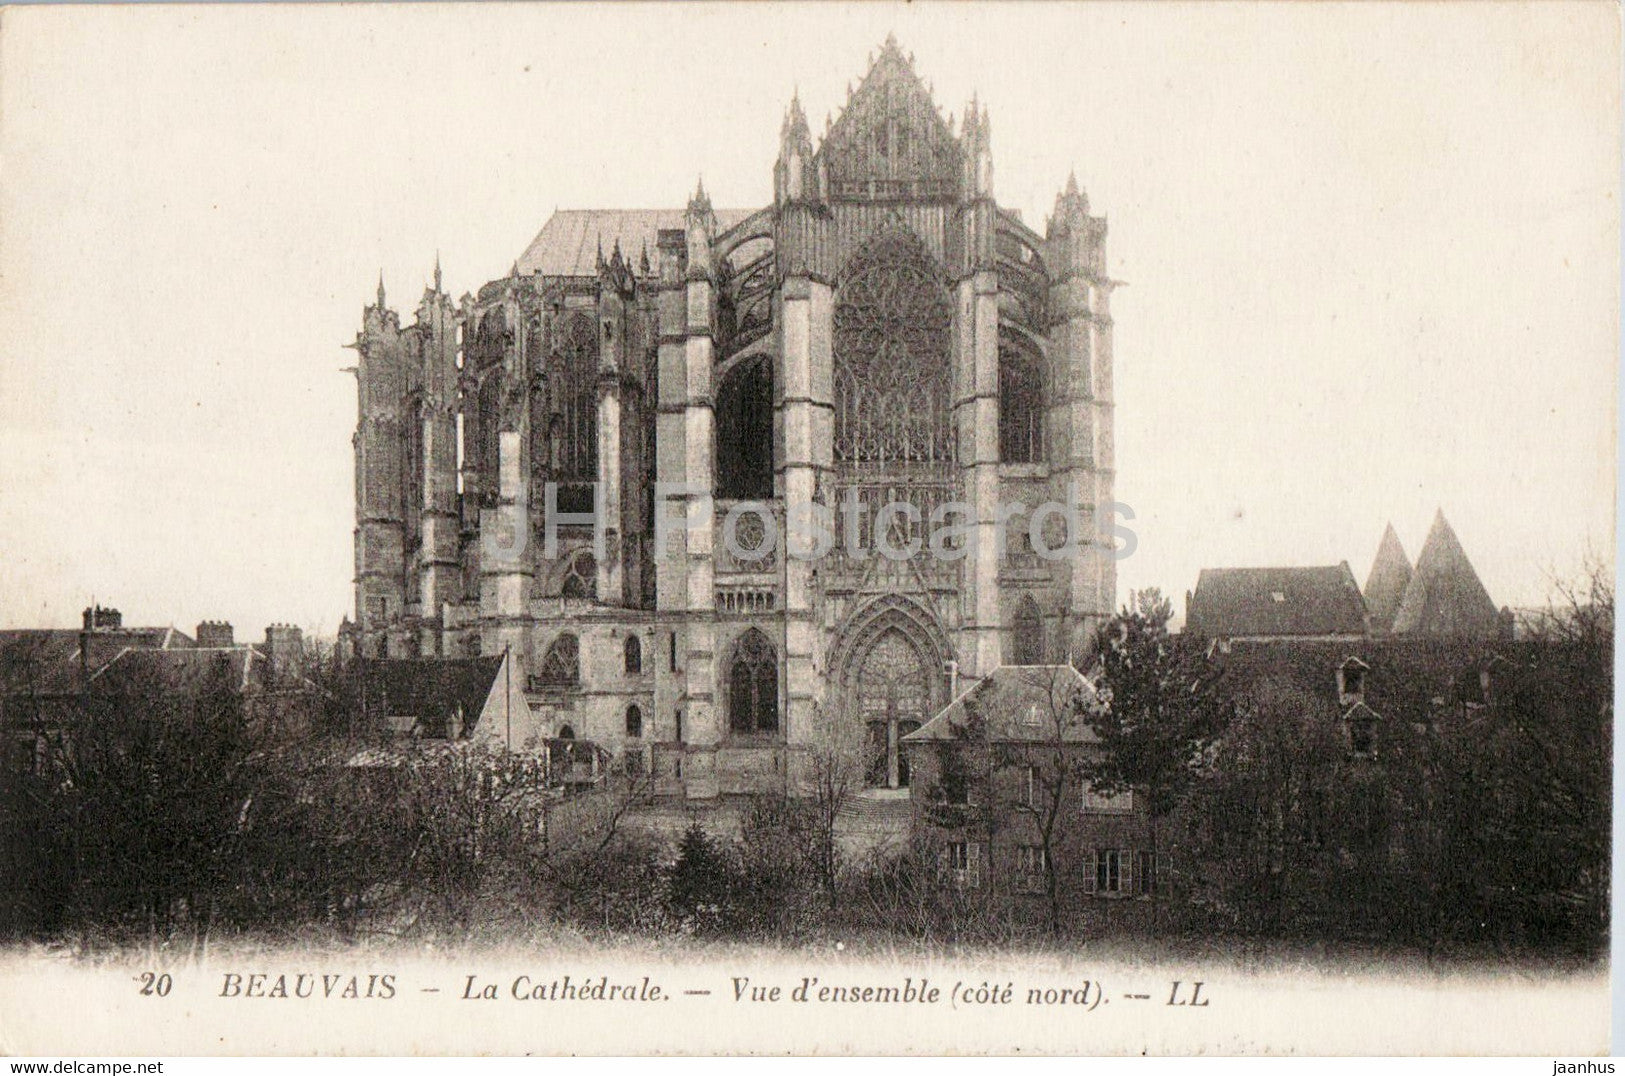 Beauvais - La Cathedrale - Vue d'ensemble - cote nord - cathedral - 20 - old postcard - France - unused - JH Postcards